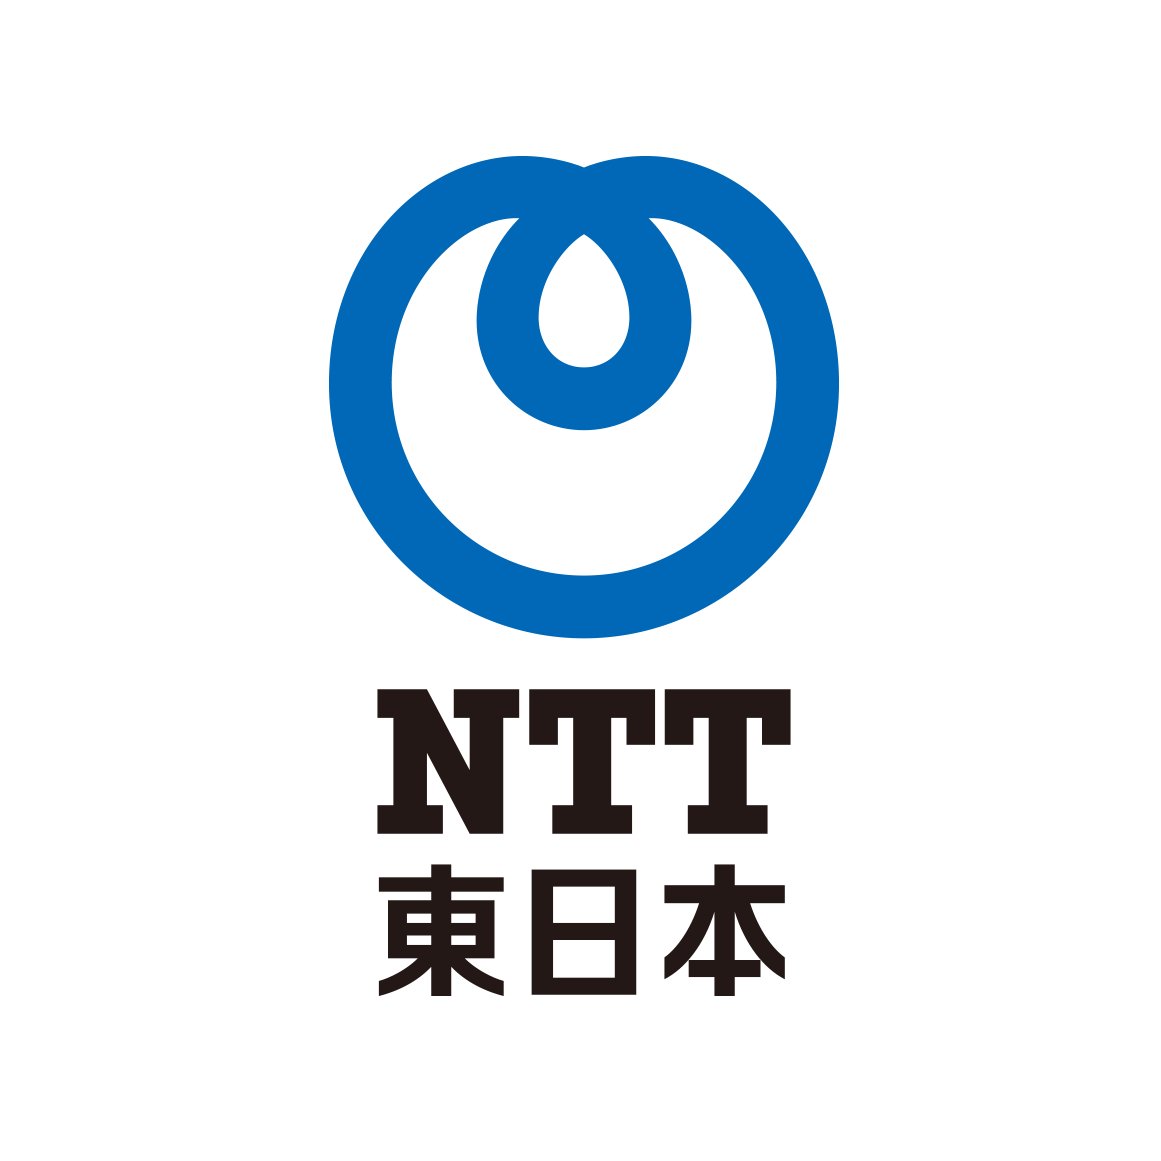 NTT東日本 (@NTTeastofficial) | Twitter